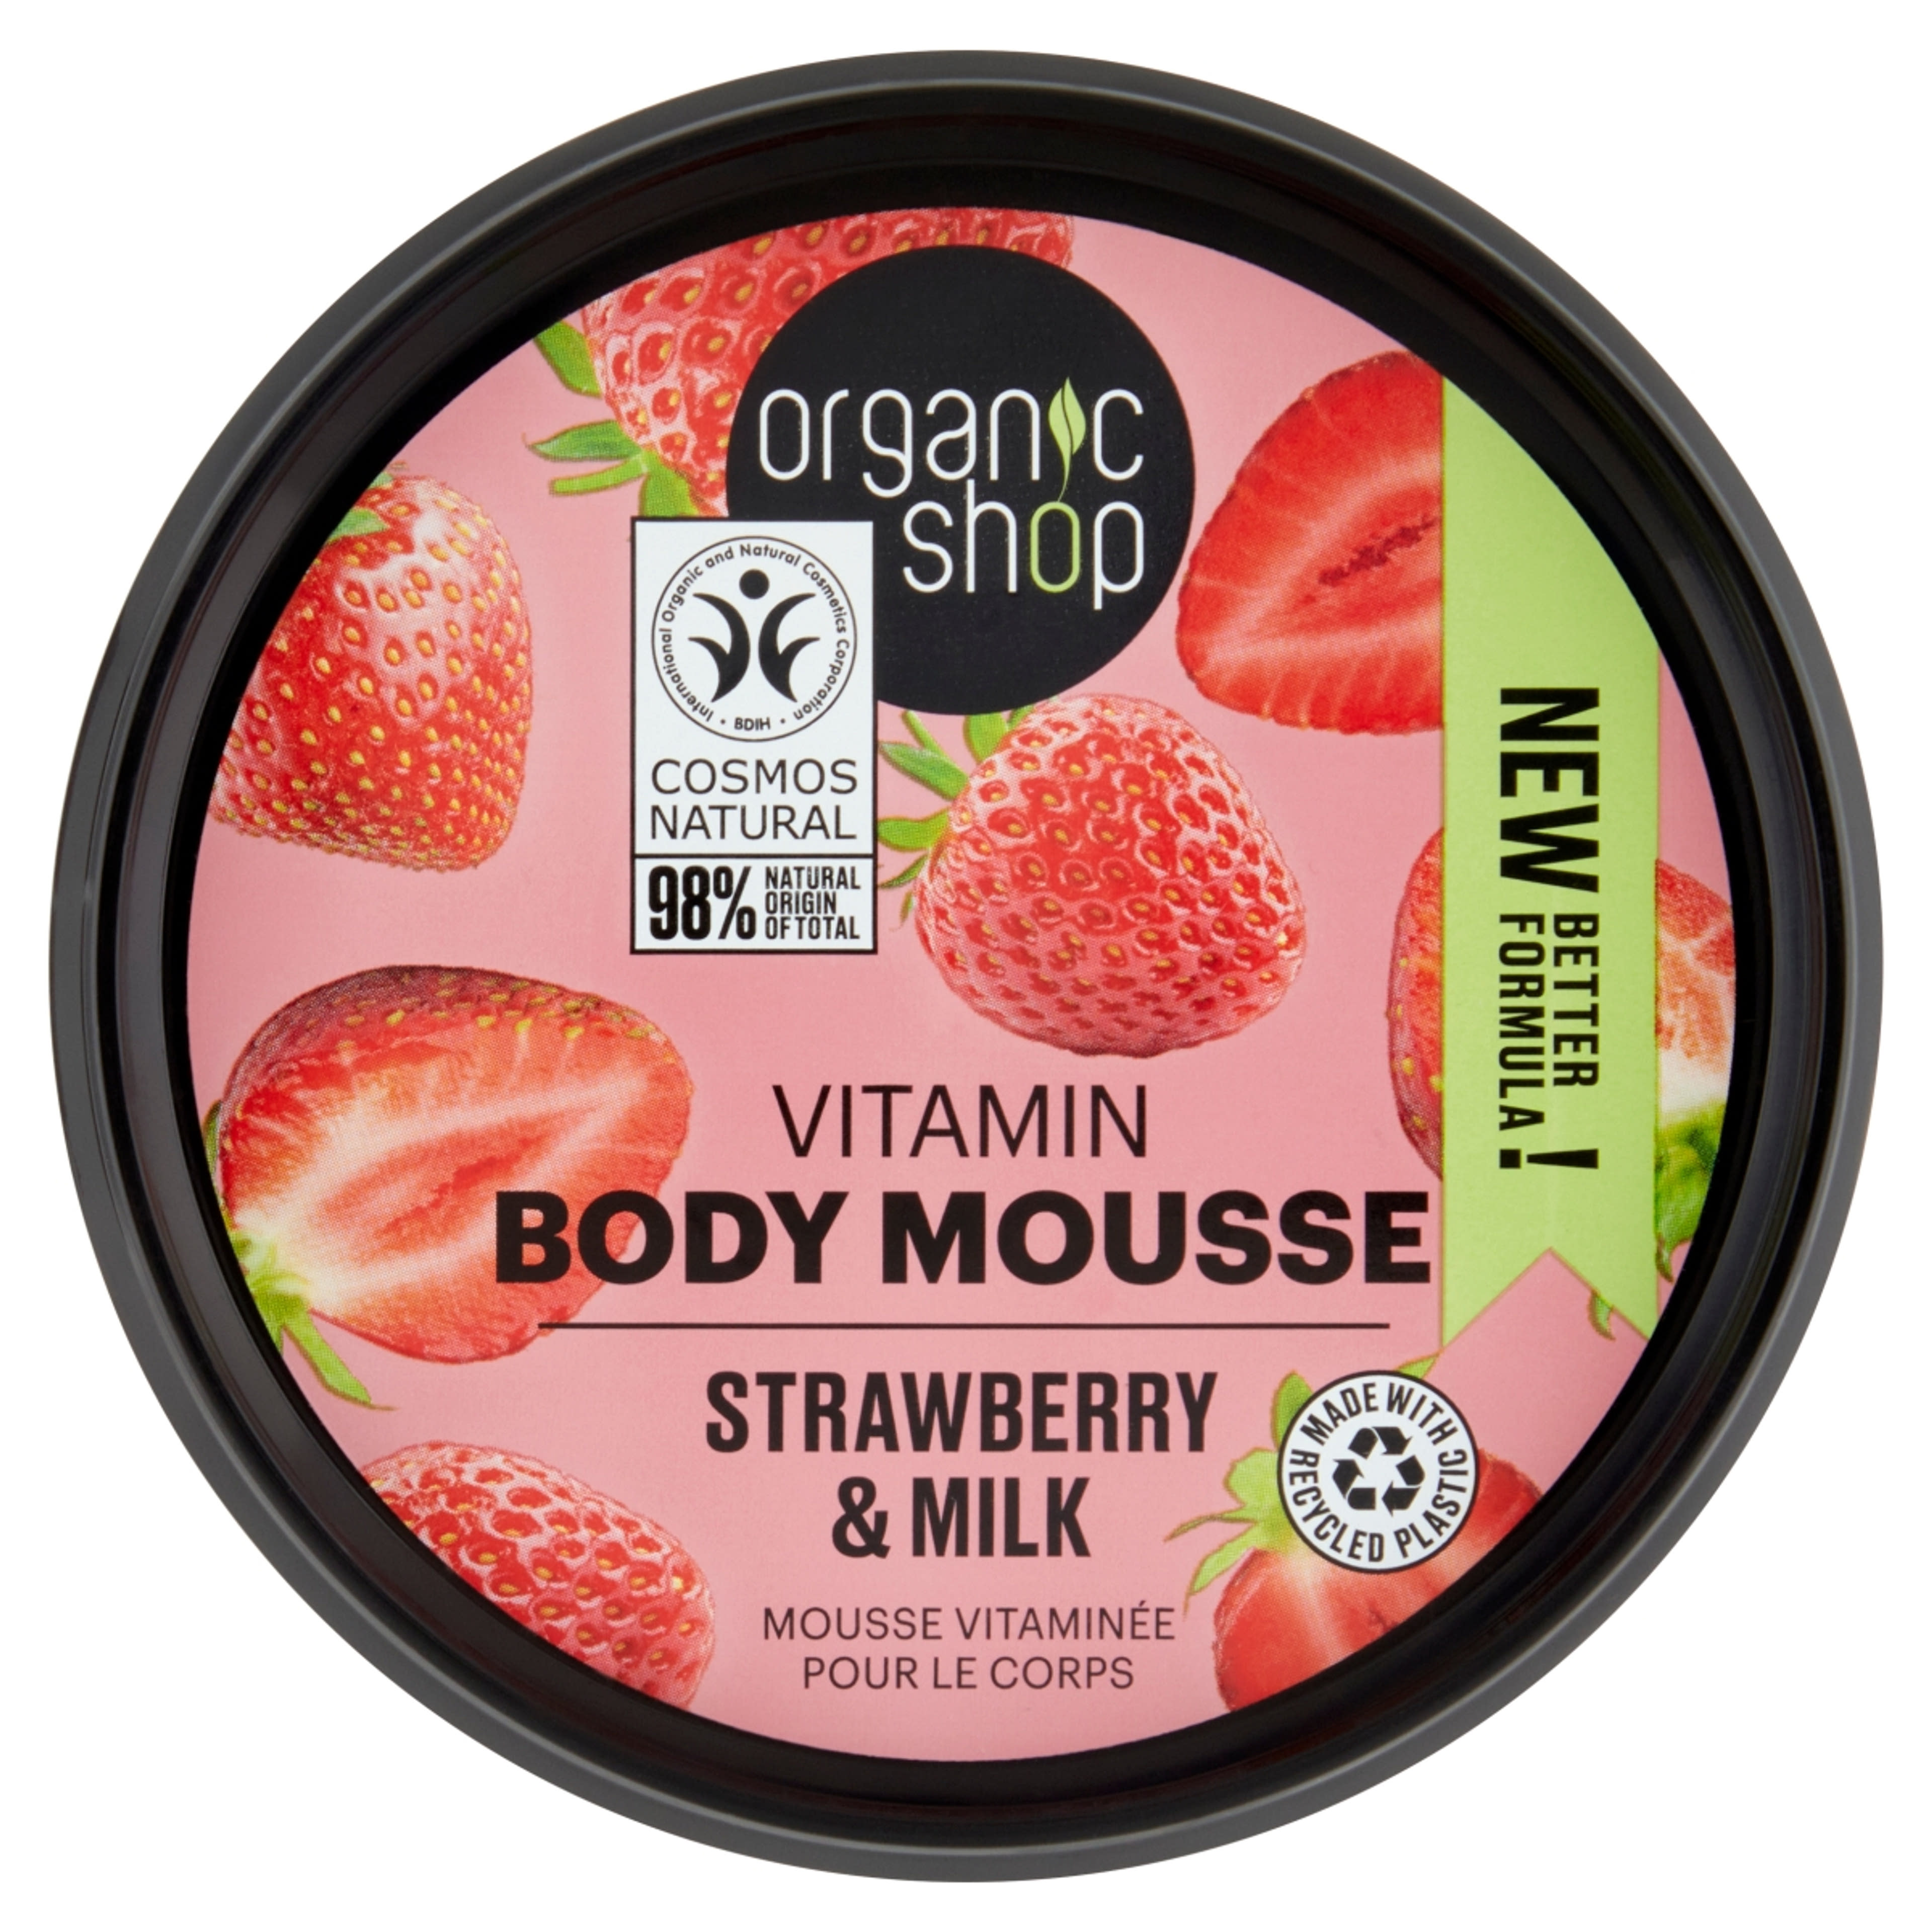 Organic shop epres yoghurt test mousse - 250 ml-1